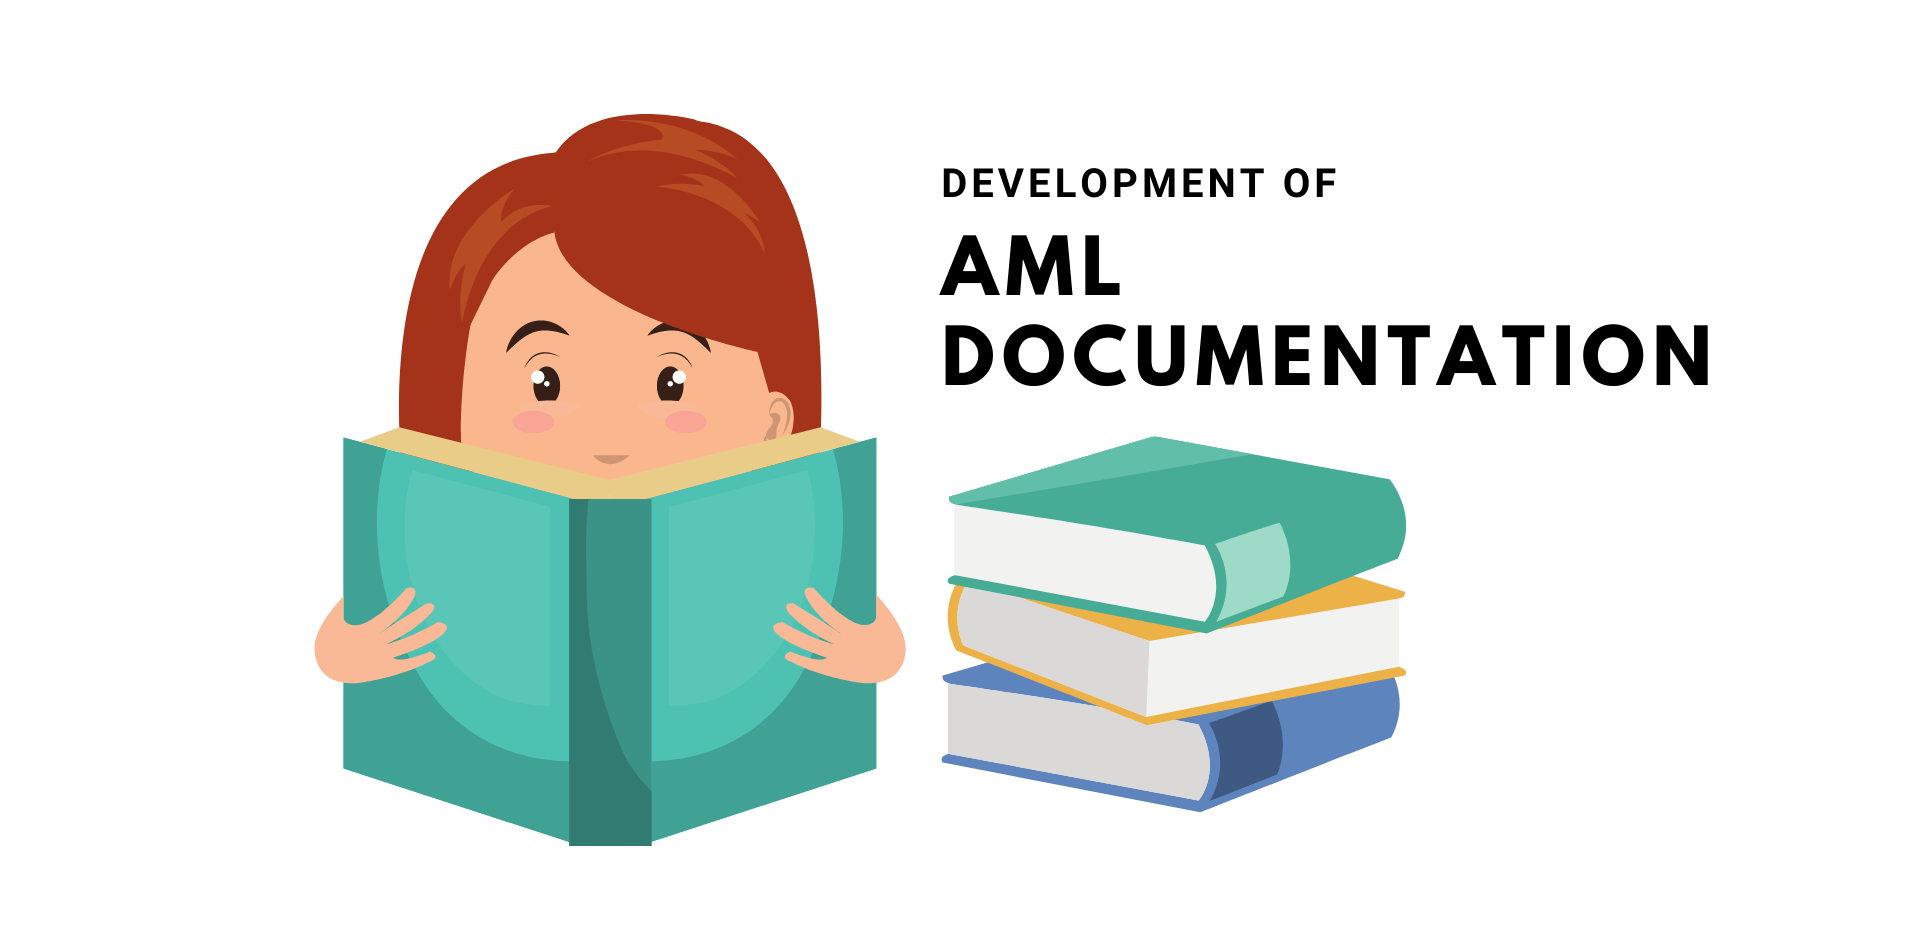 Development of AML documentation according to FIU regulatory requirements